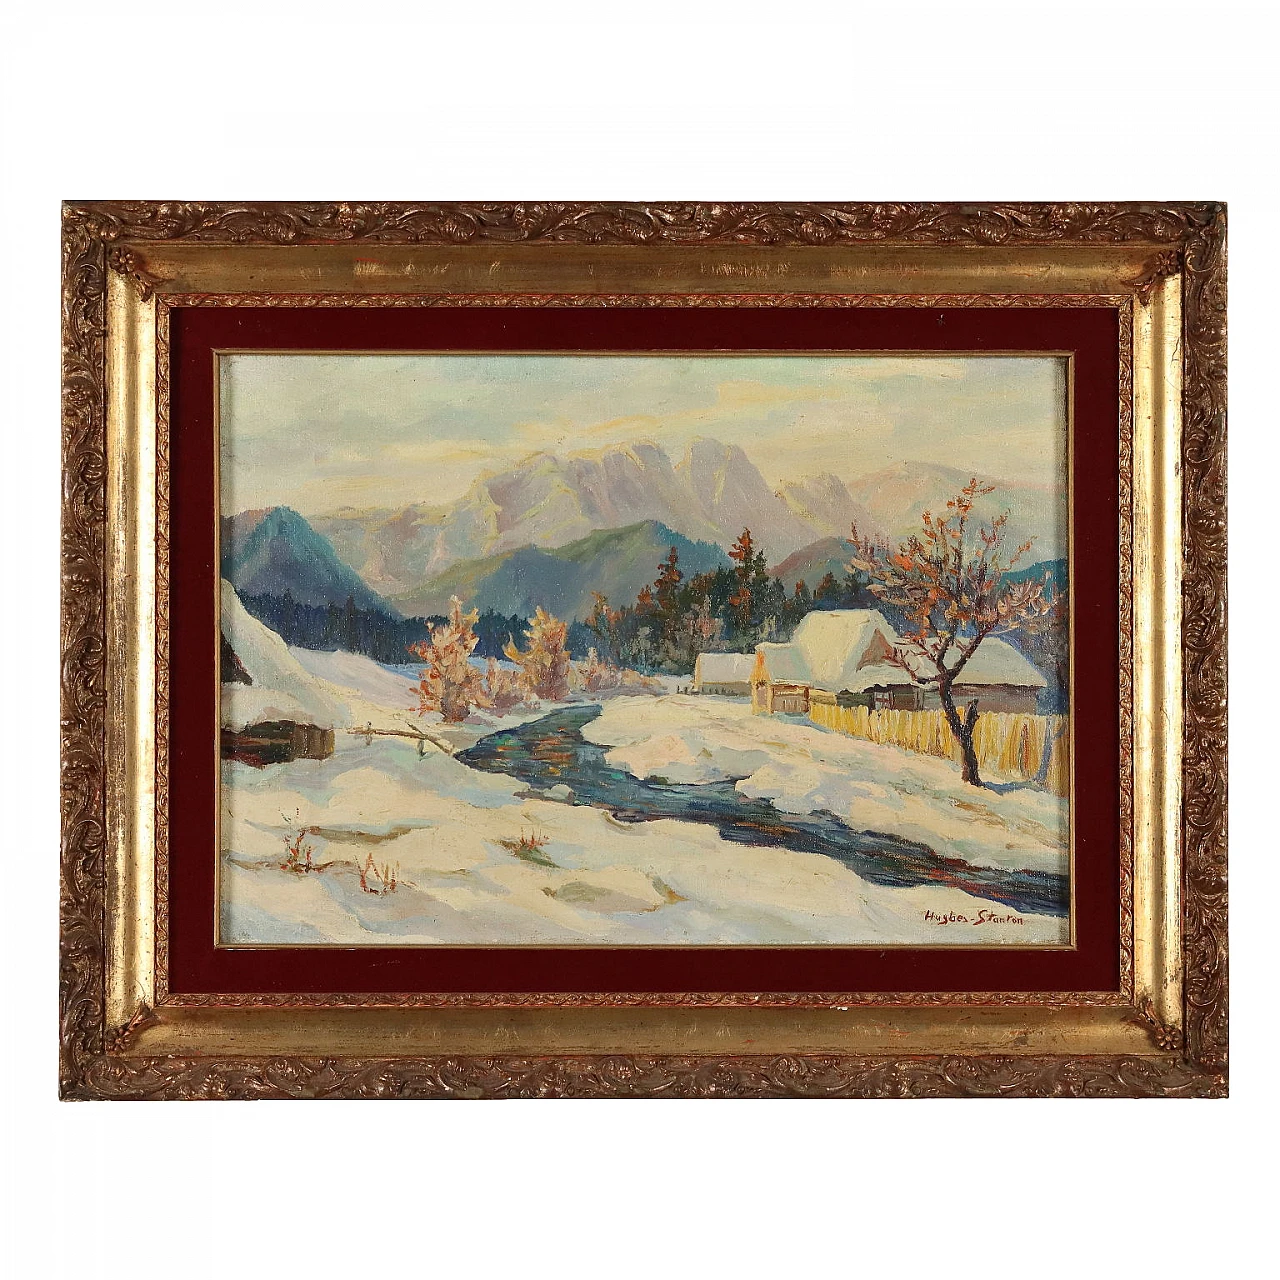 Herbert Hughes-Stanton, paesaggio innevato, dipinto a olio su tela 1